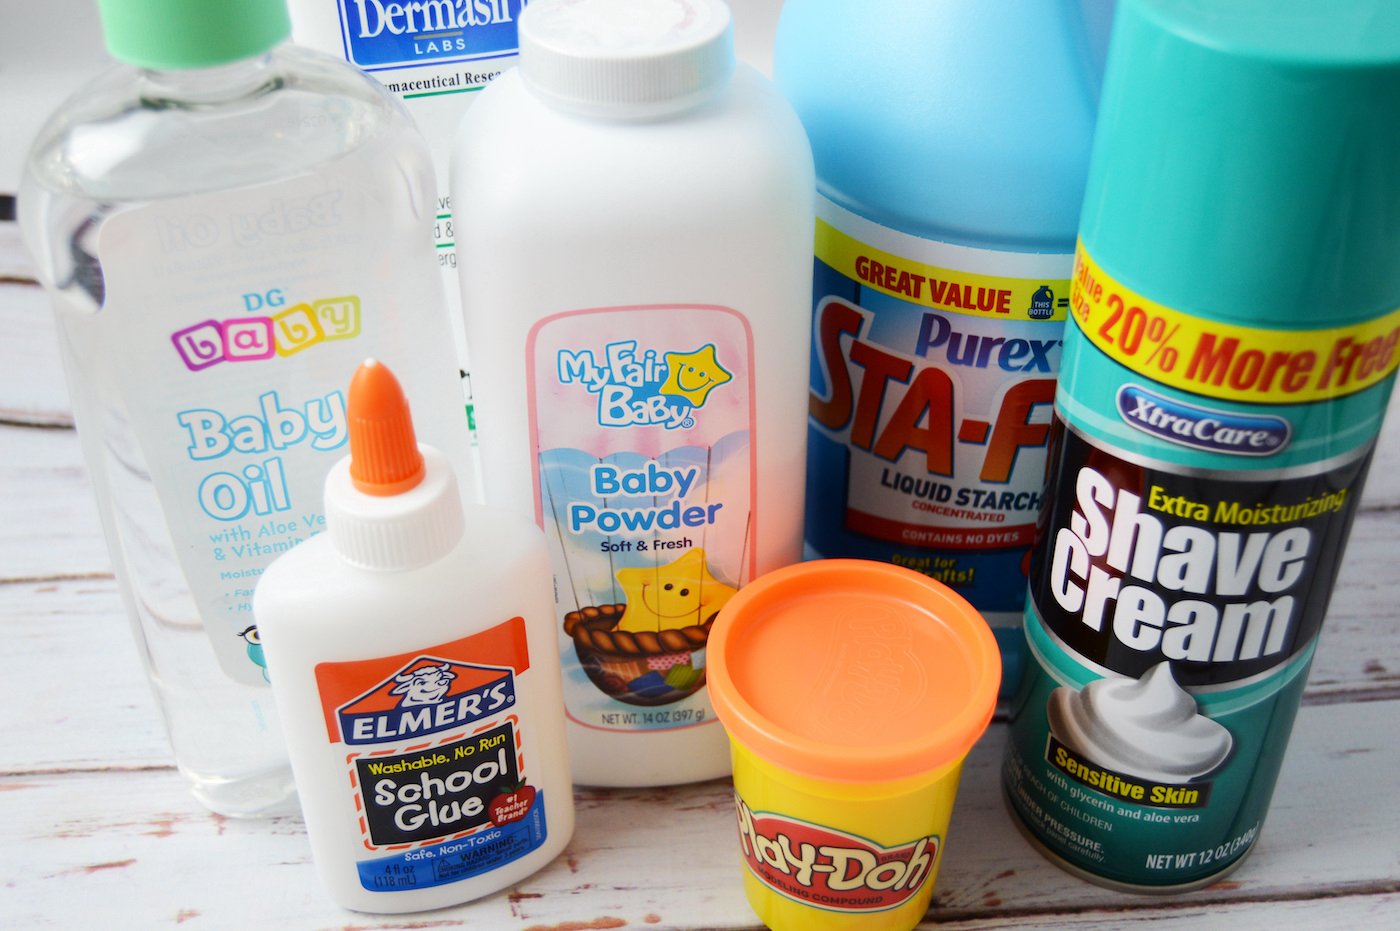 Elmer's Glue, baby powder, baby oil, Play Doh, liquid starch, and shaving cream